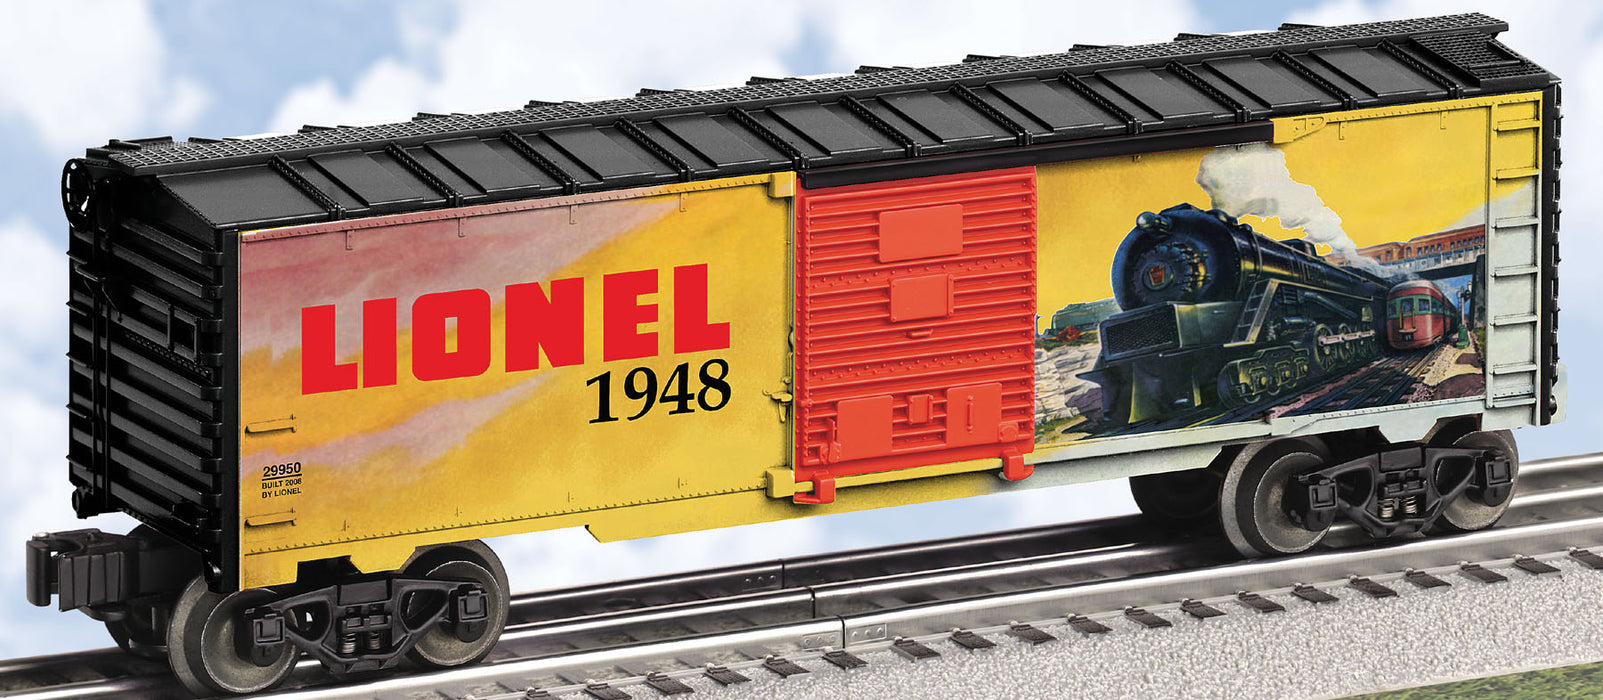 Lionel 6-29950 O Gauge 1948 Lionel Art Boxcar - NOS